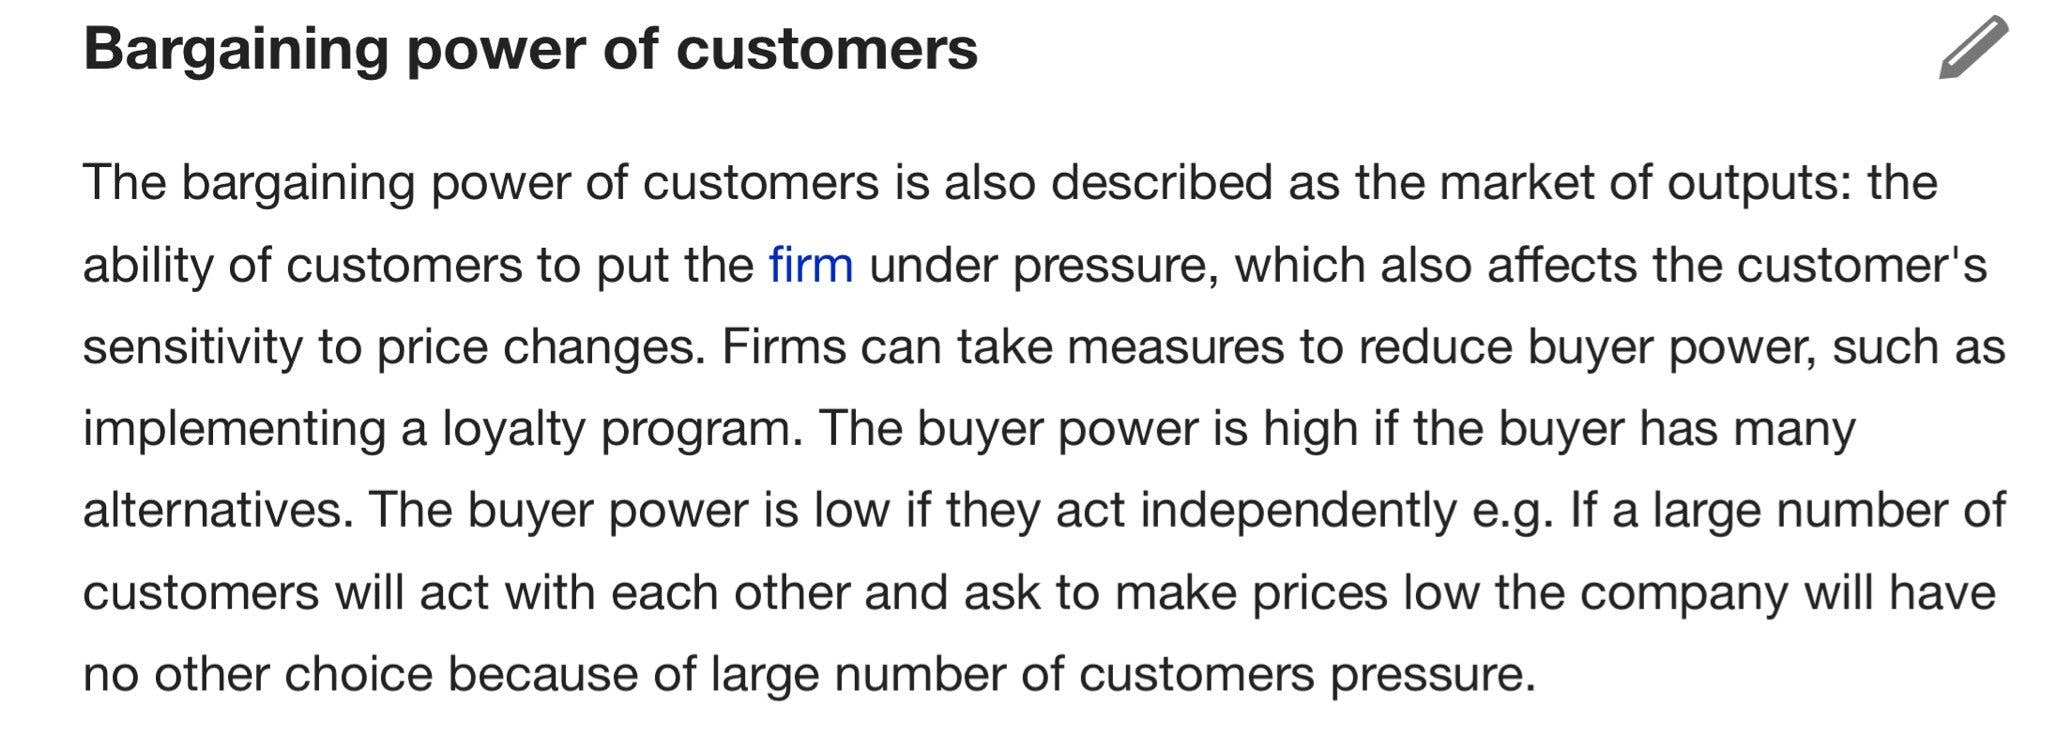 Bargaining power of customers